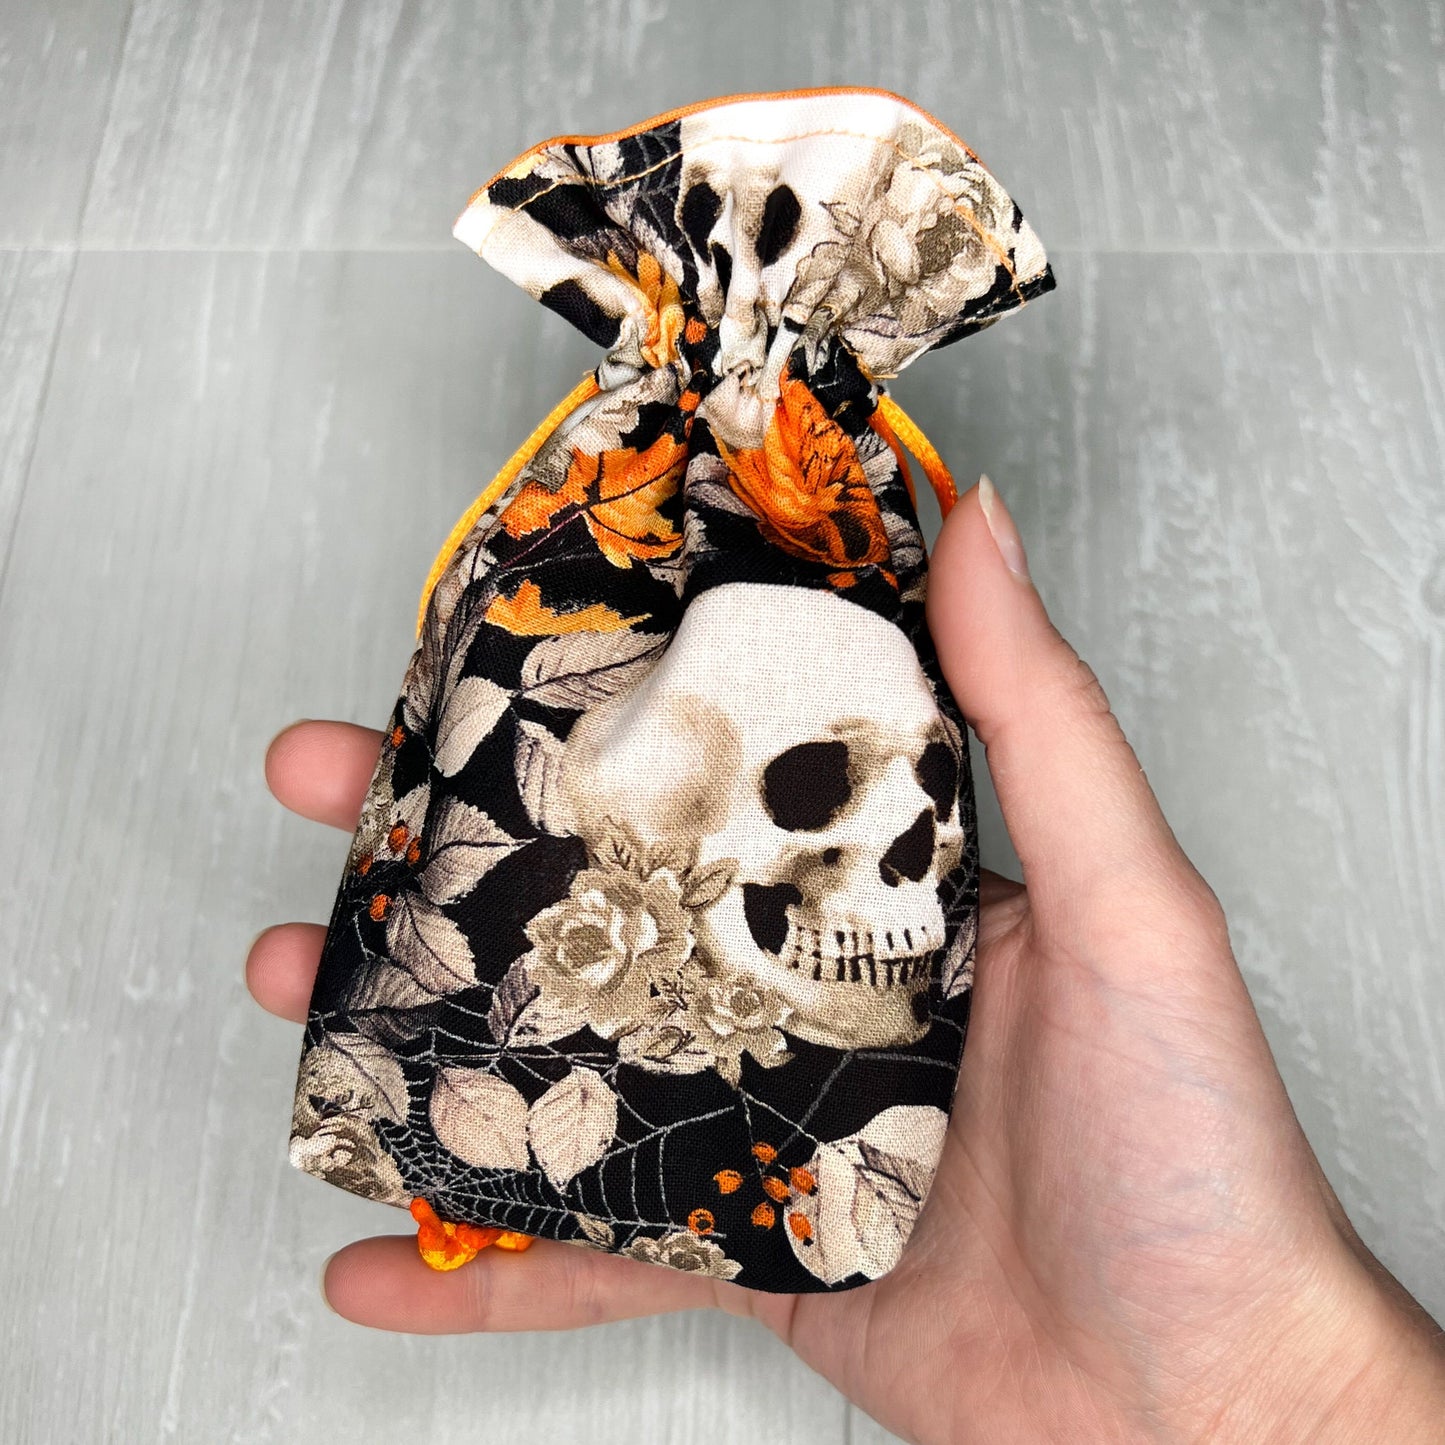 Mini Orange Skulls Tarot Deck Bag, Pocket Tarot Drawstring Pouch, Dice Rune Crystal Bag, Witchcraft Pagan Supplies Gifts, Divination Tools